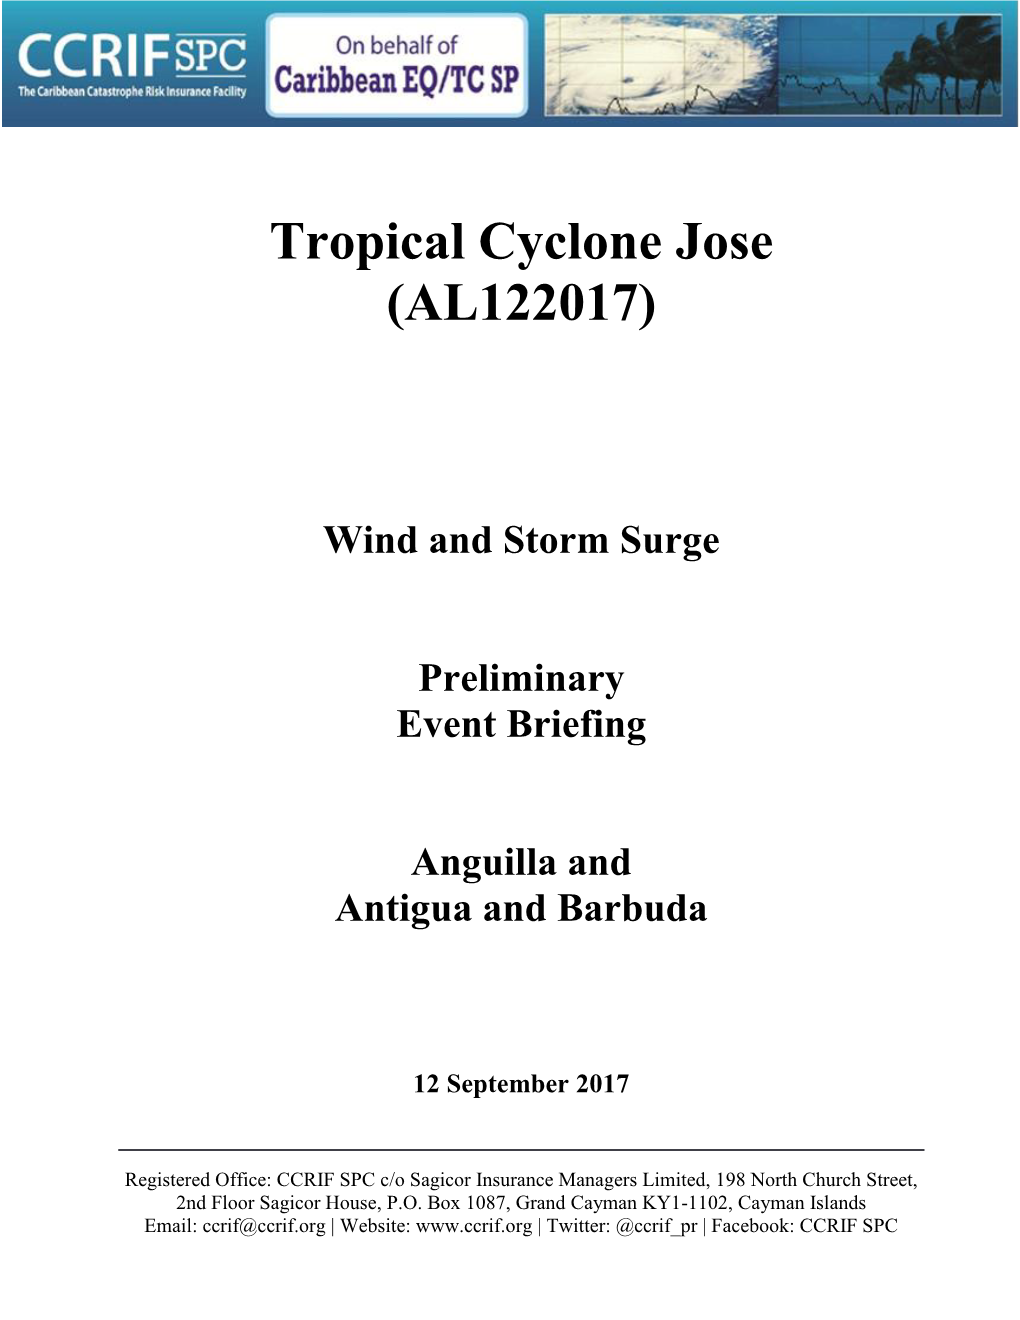 Tropical Cyclone Jose (AL122017)